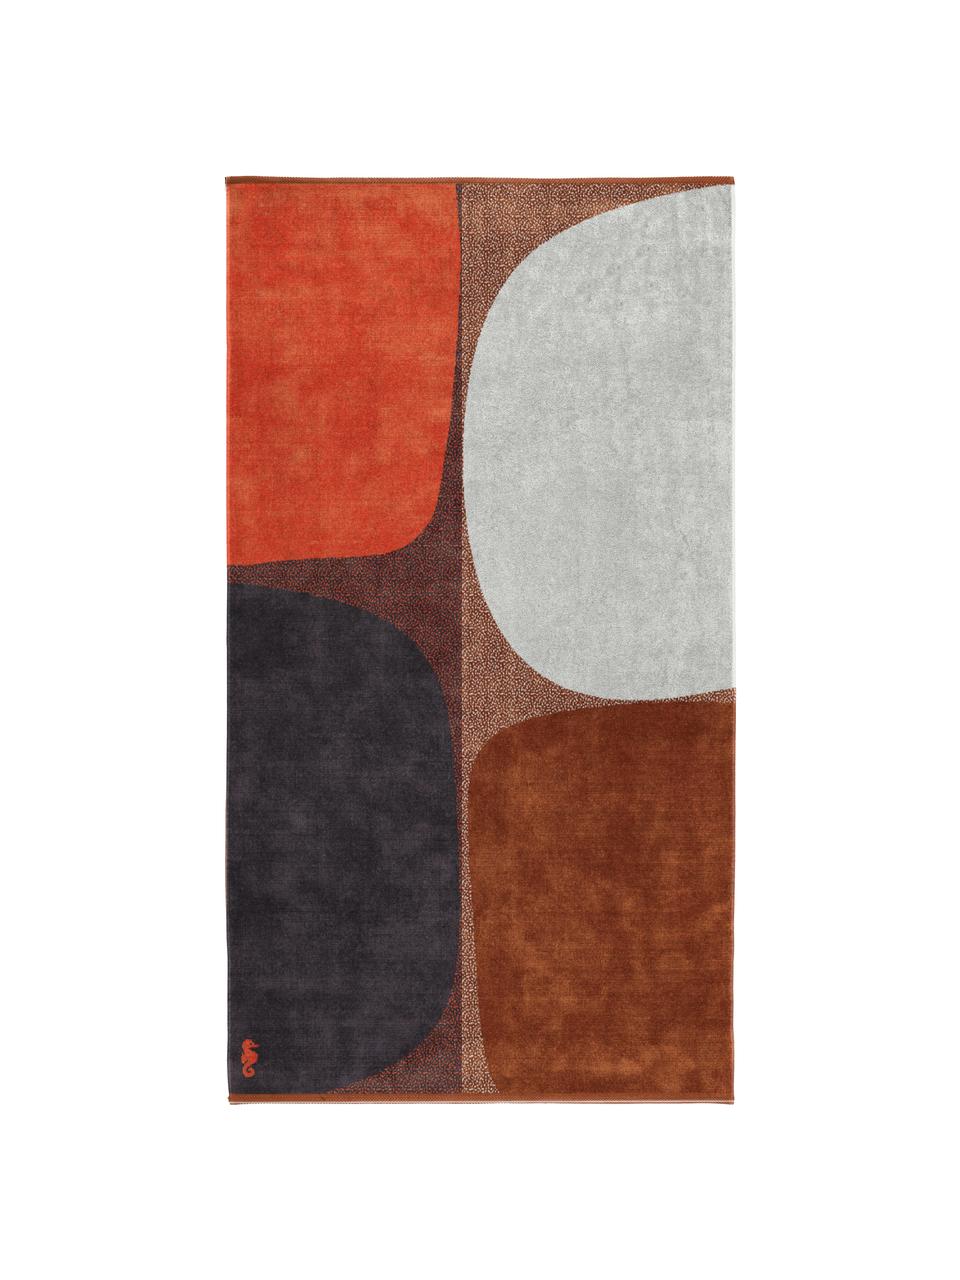 Plážová osuška s abstraktním vzorem Stones, Oranžová, hnědá, bílá, černá, Š 100 cm, D 180 cm